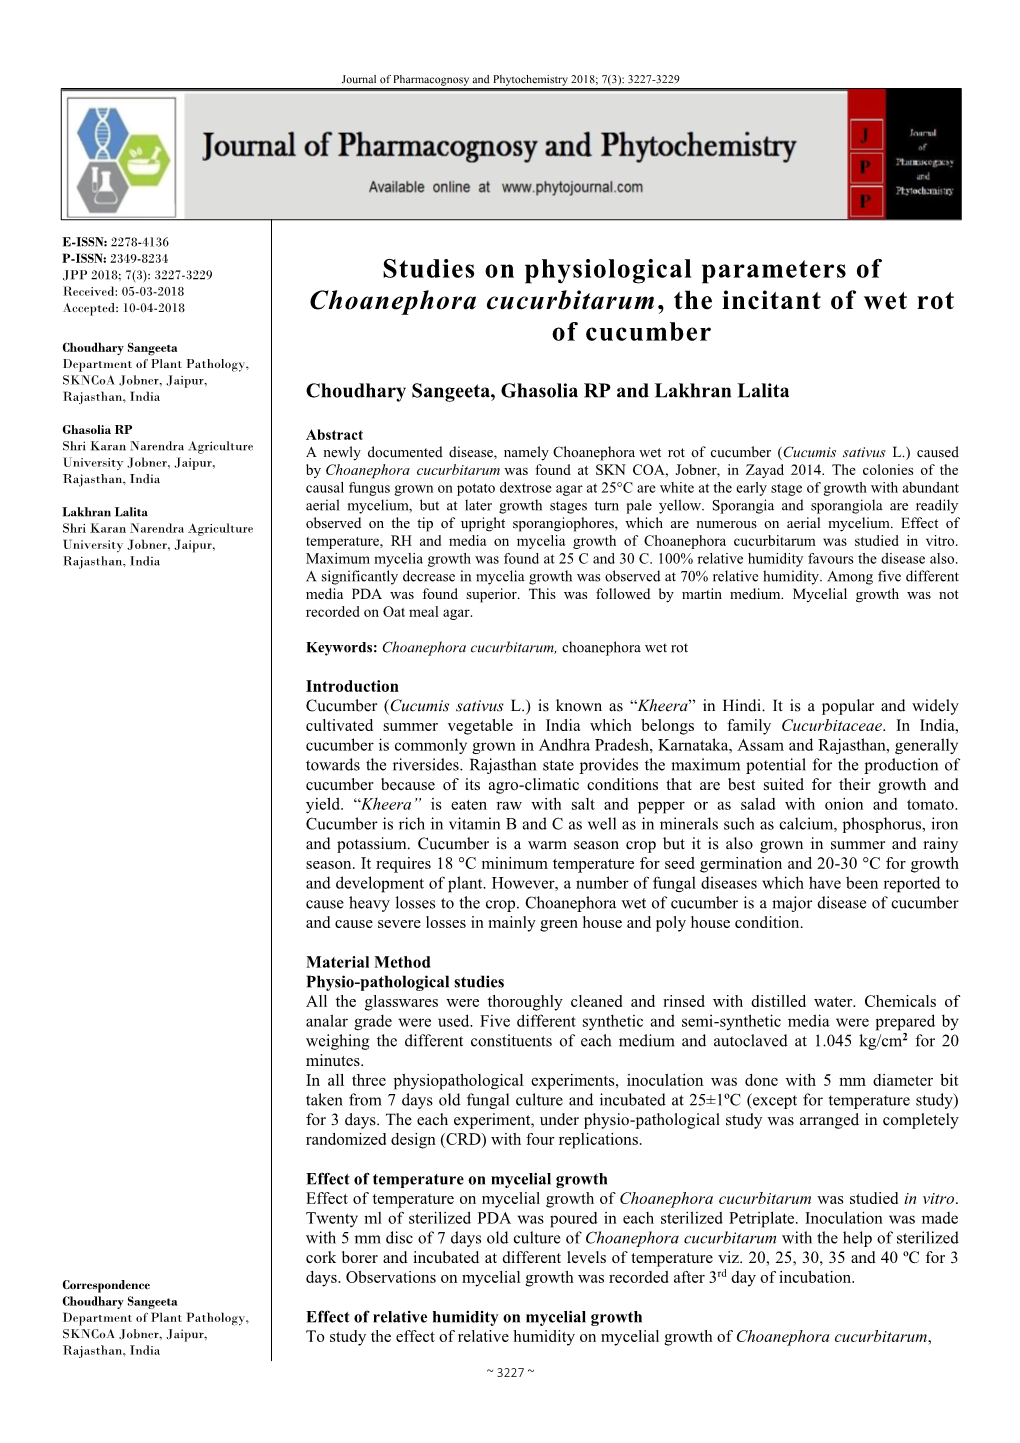 Studies on Physiological Parameters of Choanephora Cucurbitarum, The